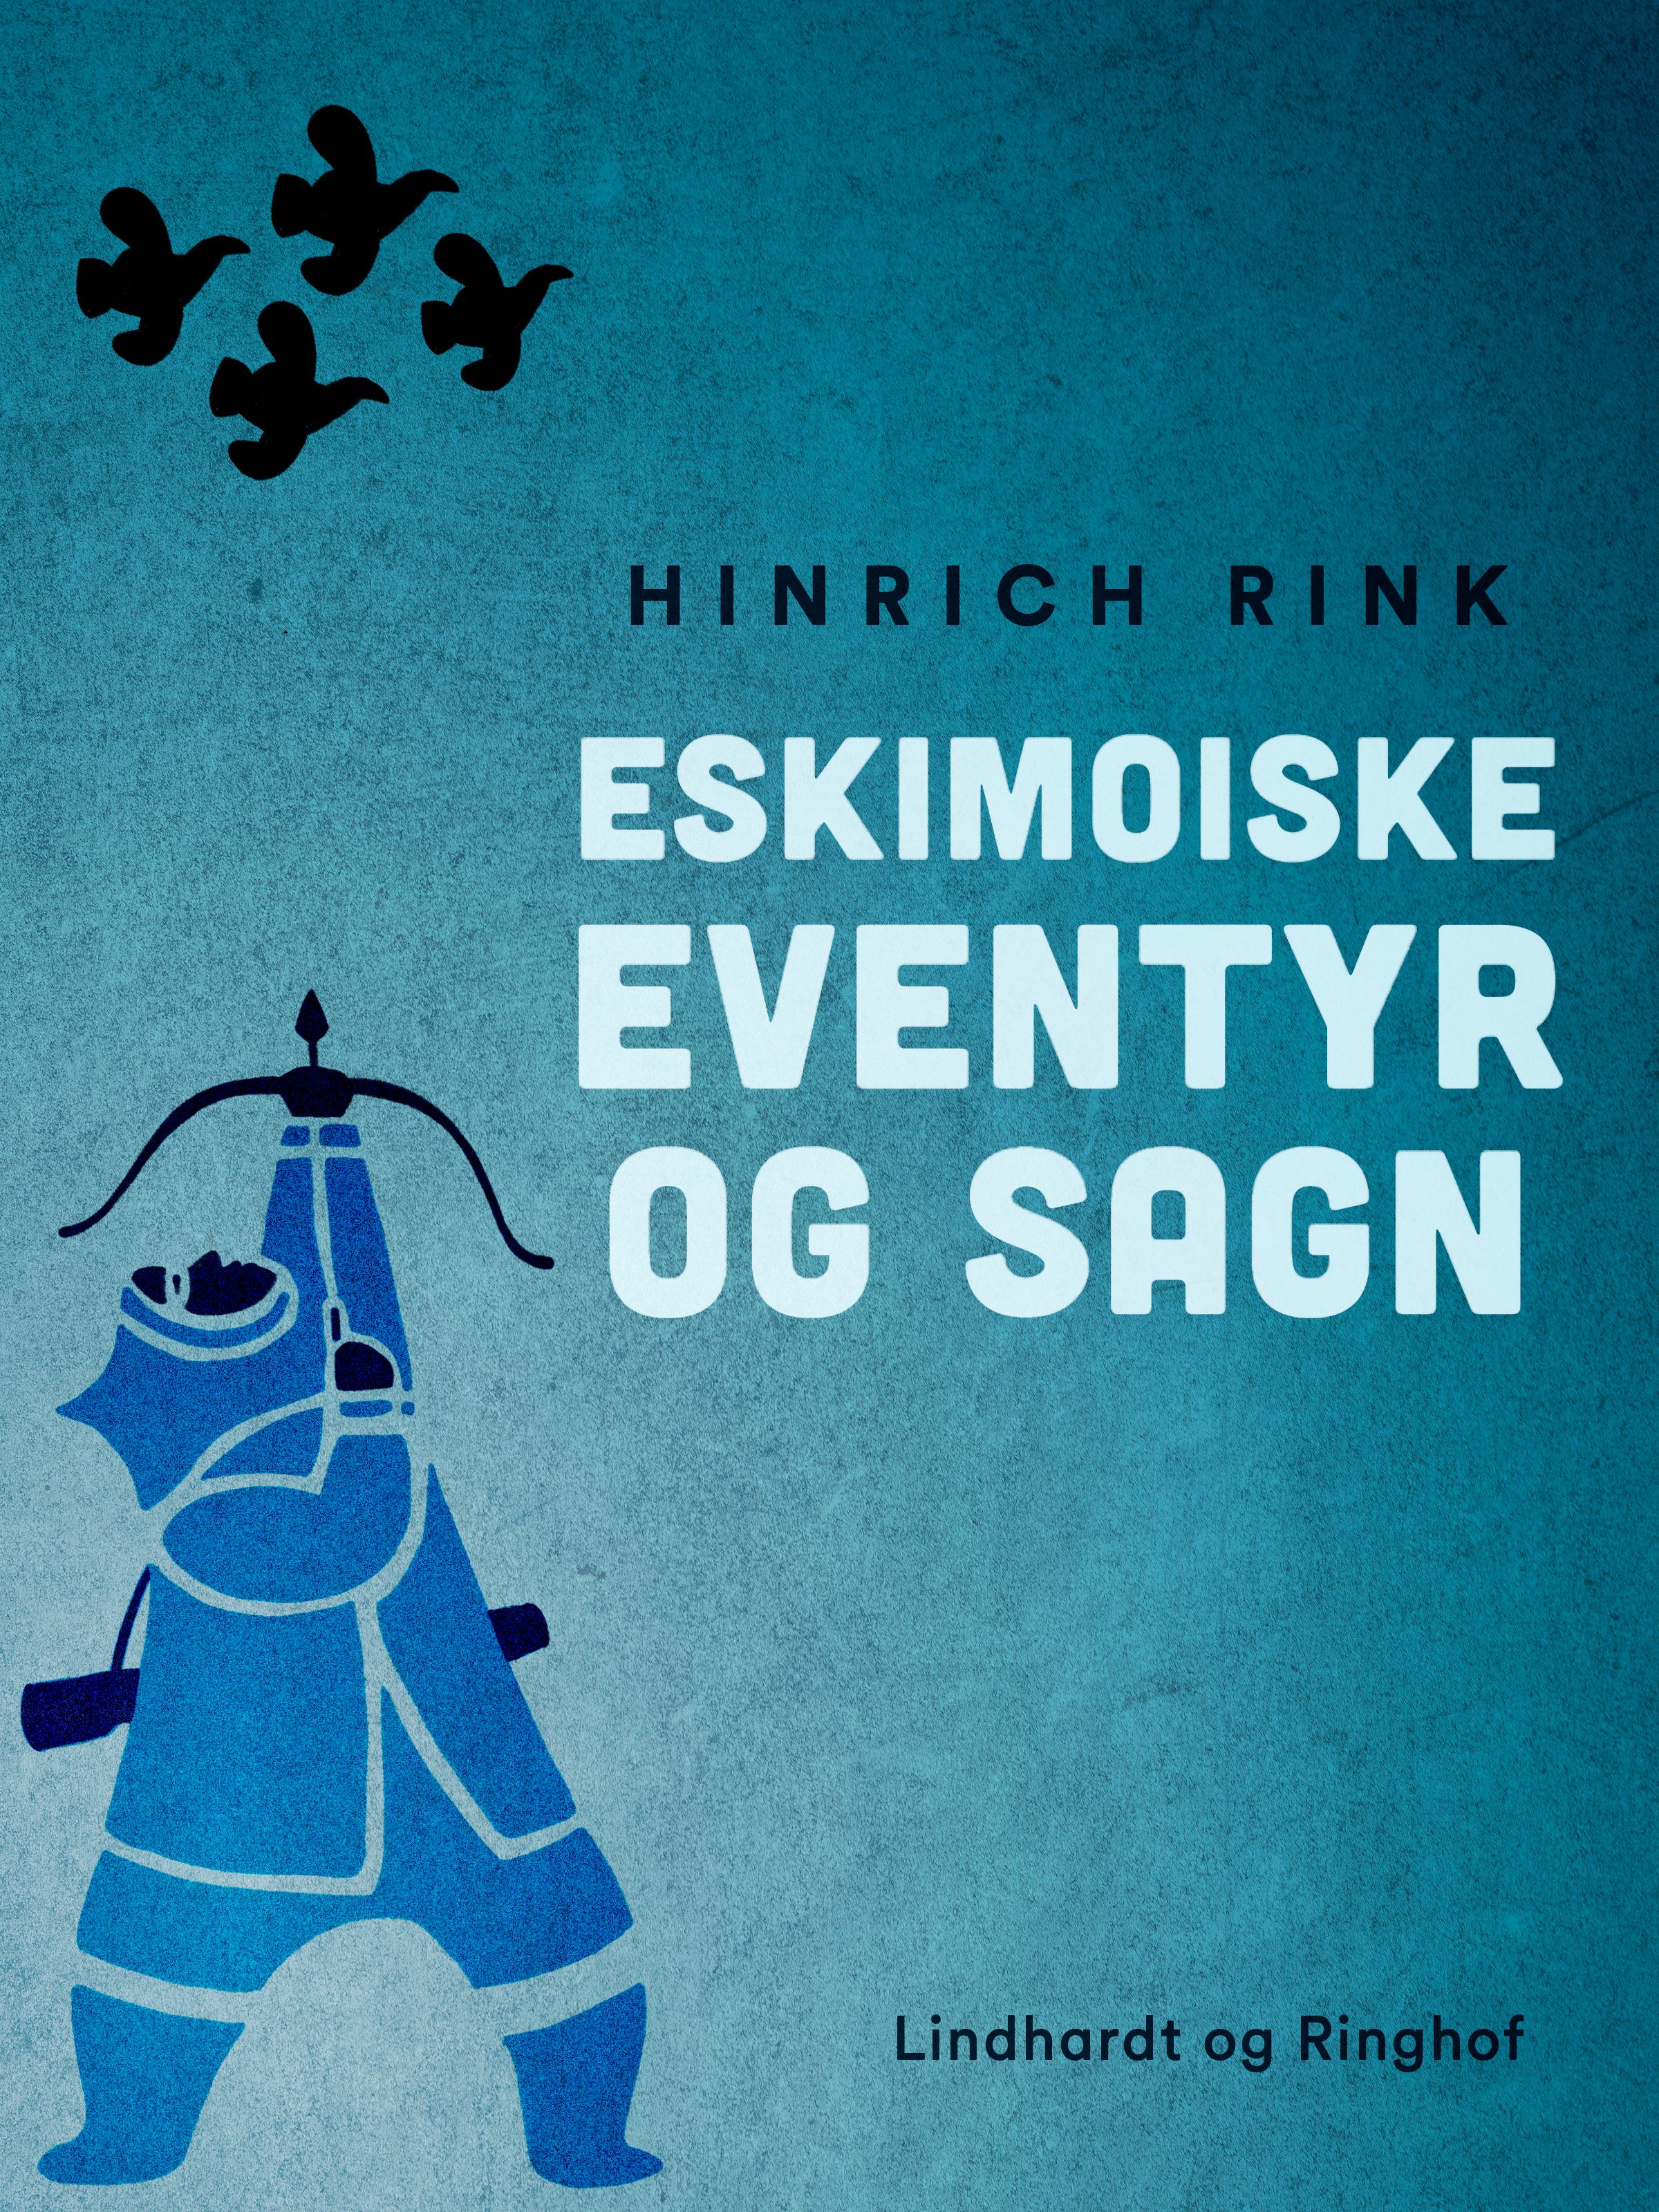 Eskimoiske eventyr og sagn, eBook by Hinrich Rink